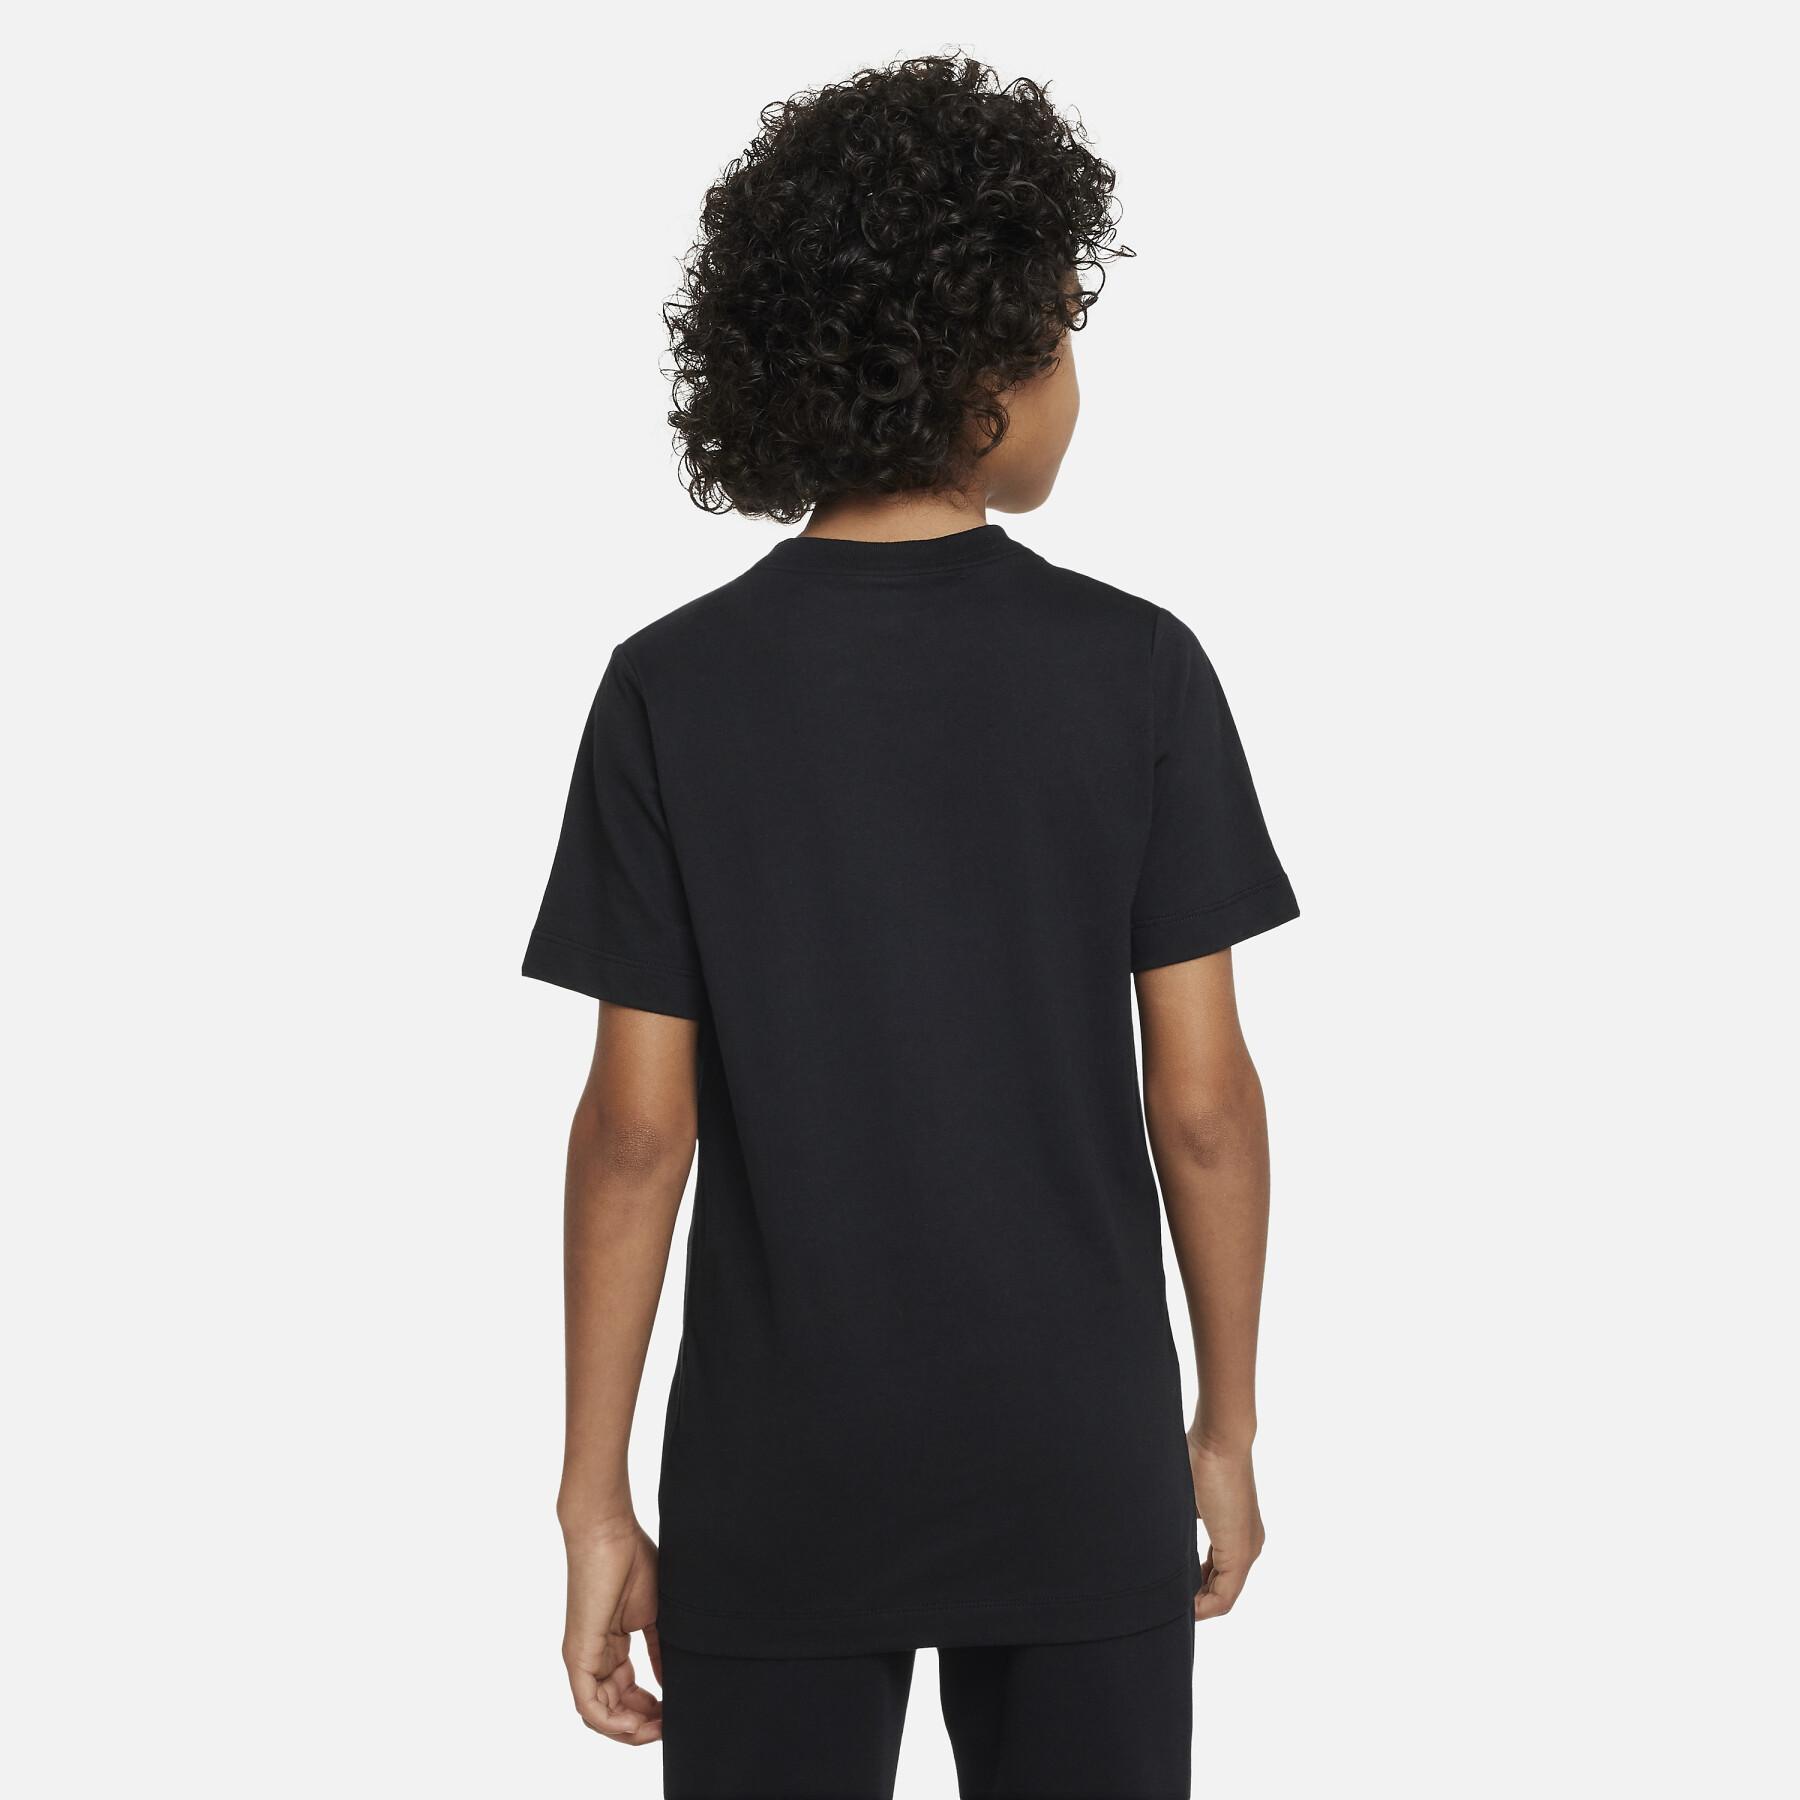 Child's T-shirt Nike Logo